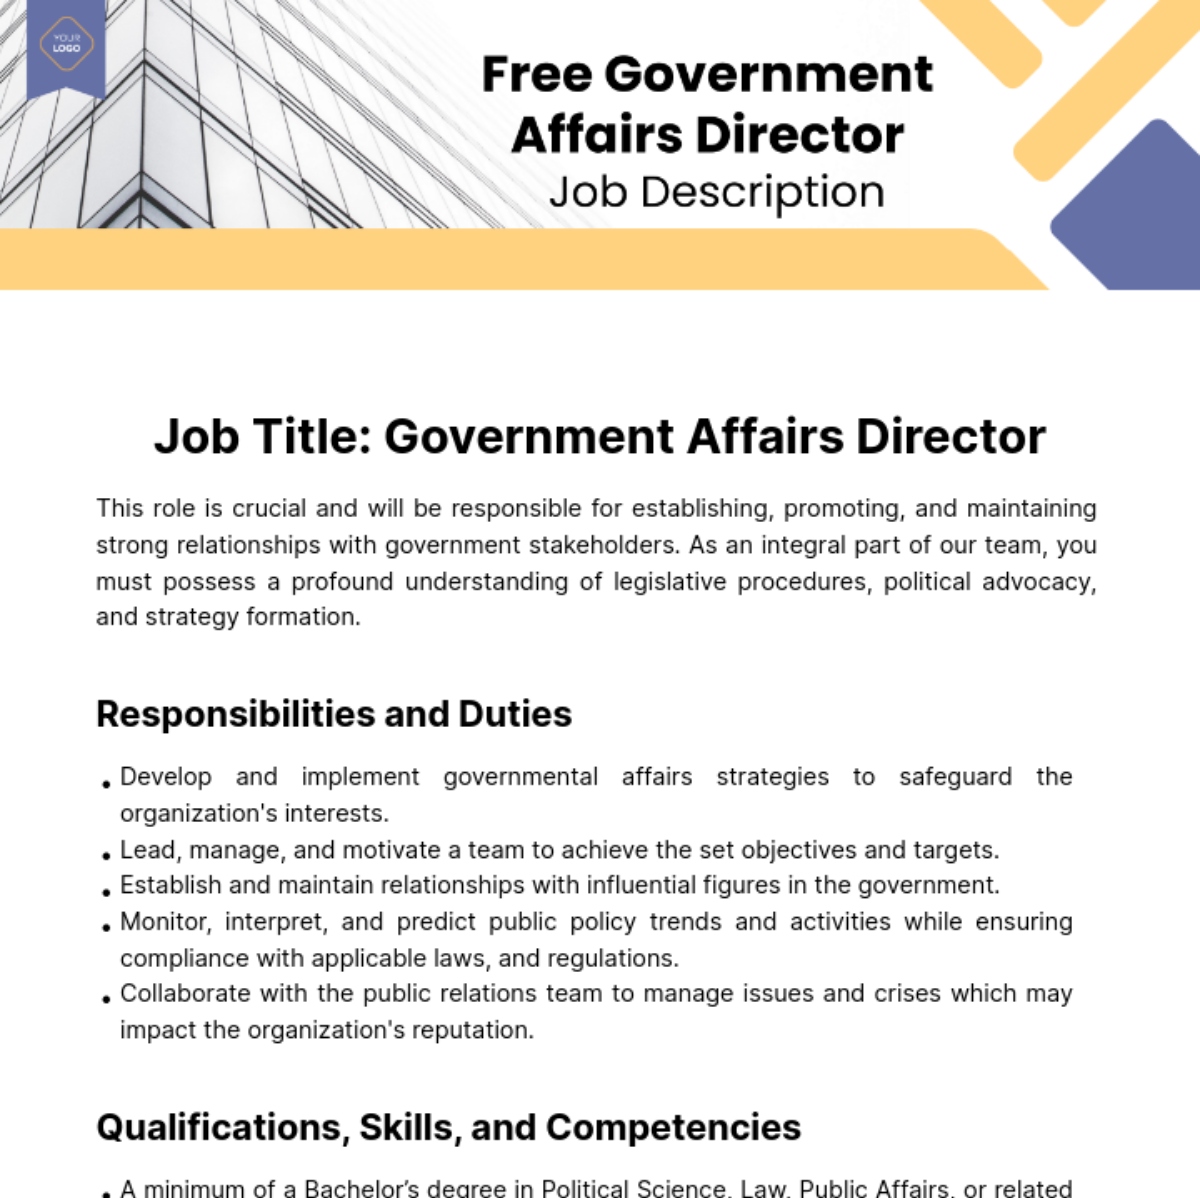 Free Government Affairs Director Job Description Template